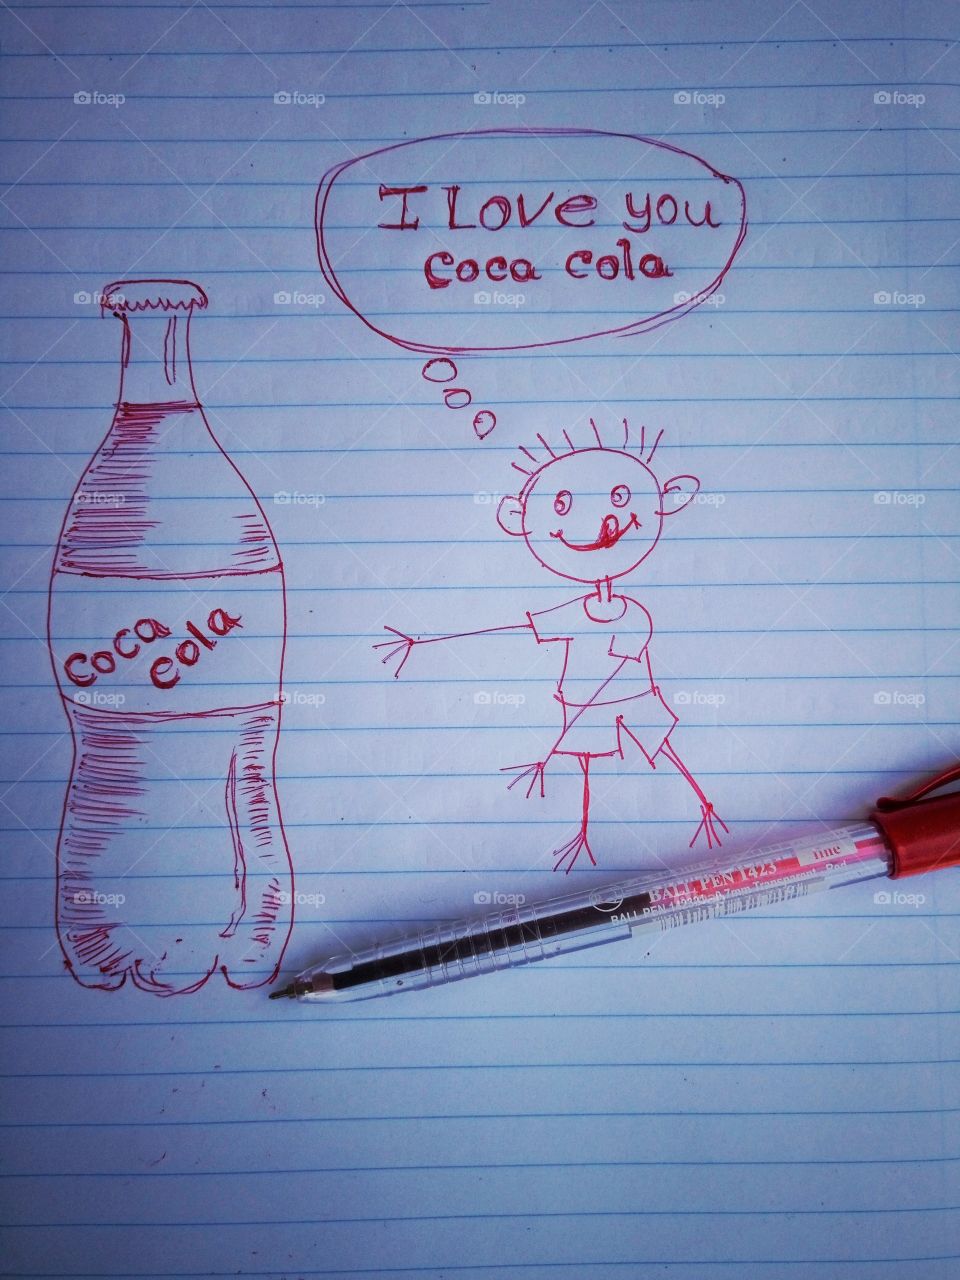 i love you coca cola